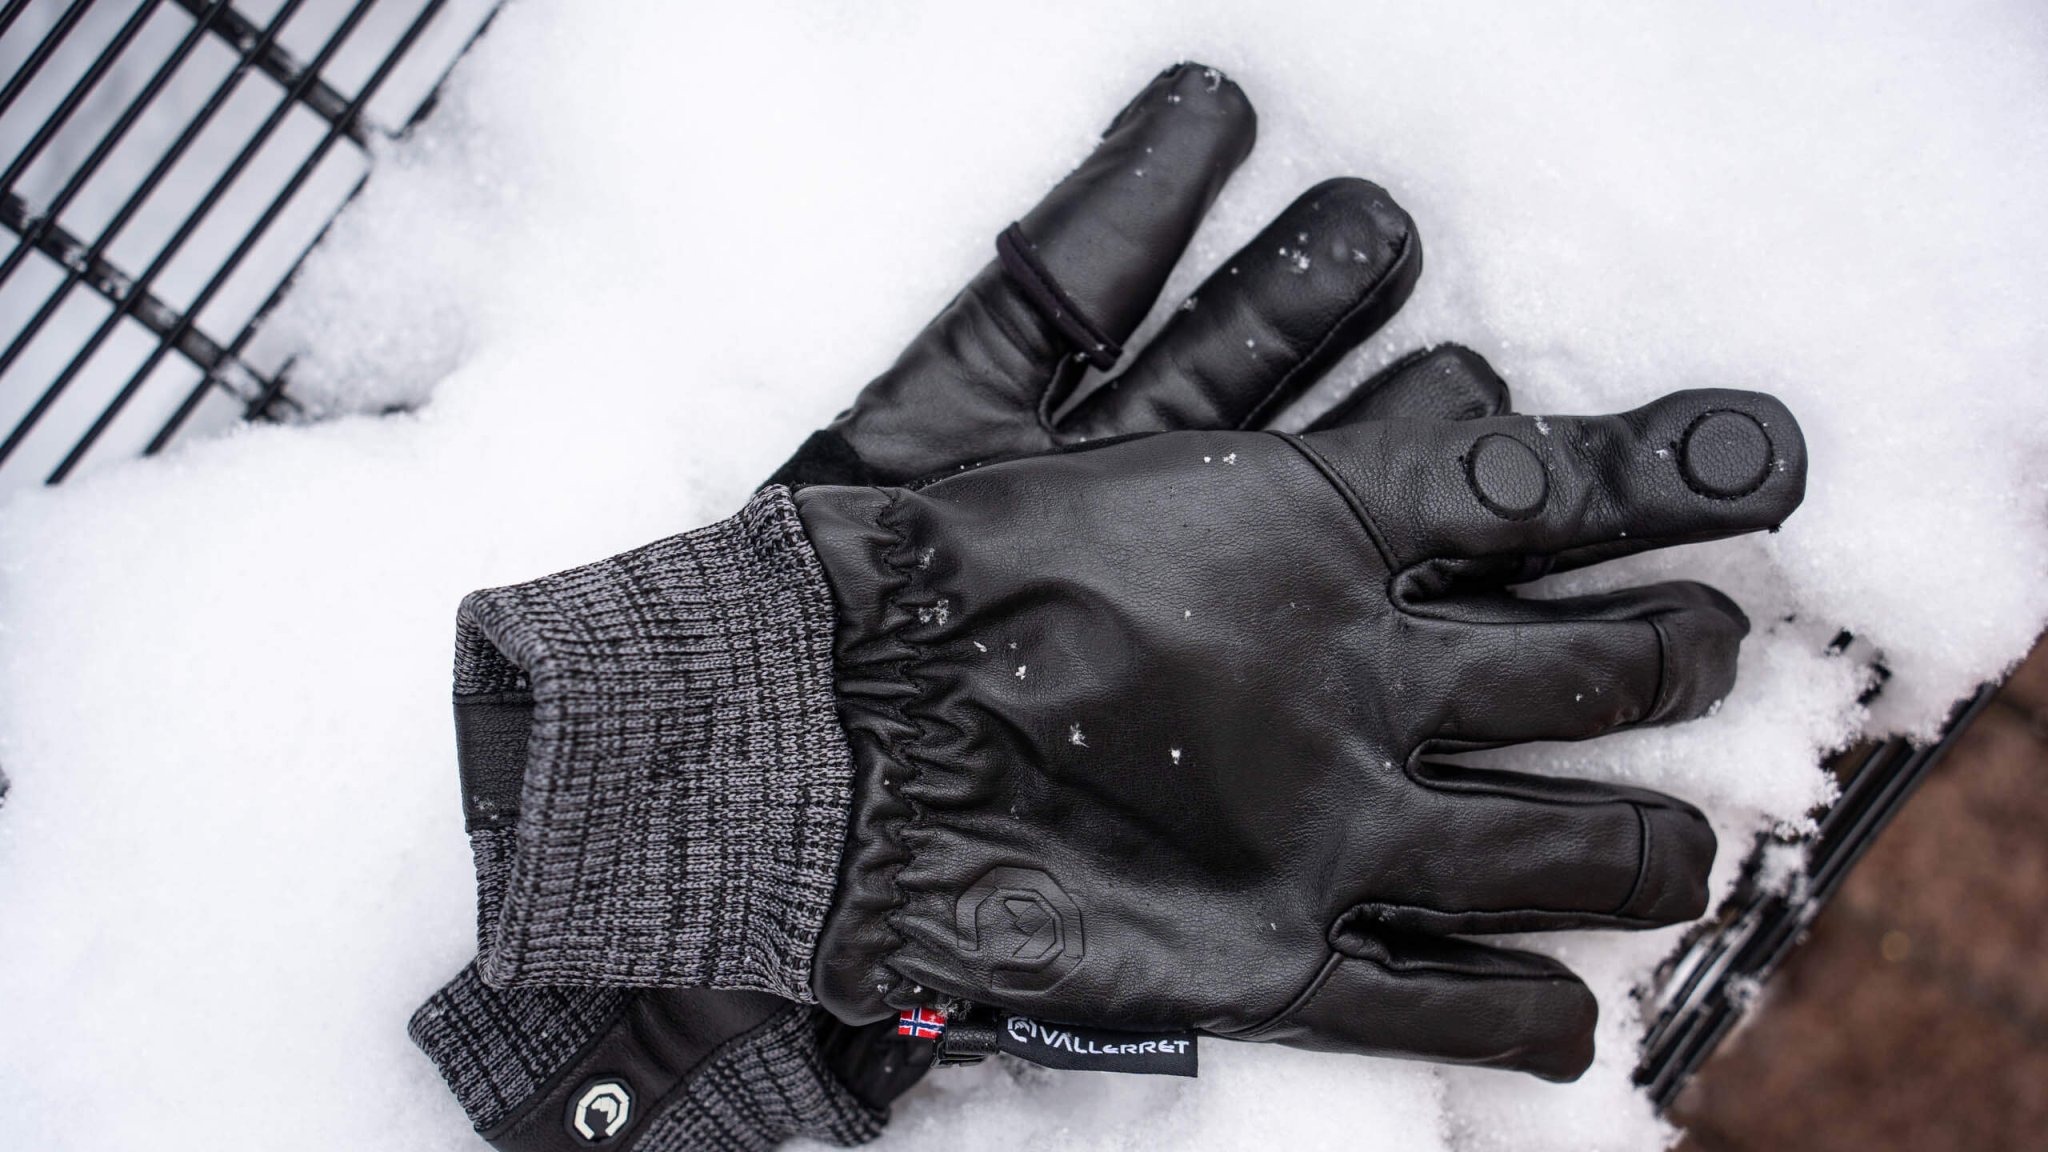 Sub-zero temperatures? No problem, with Vallerret's new Hatchet gloves